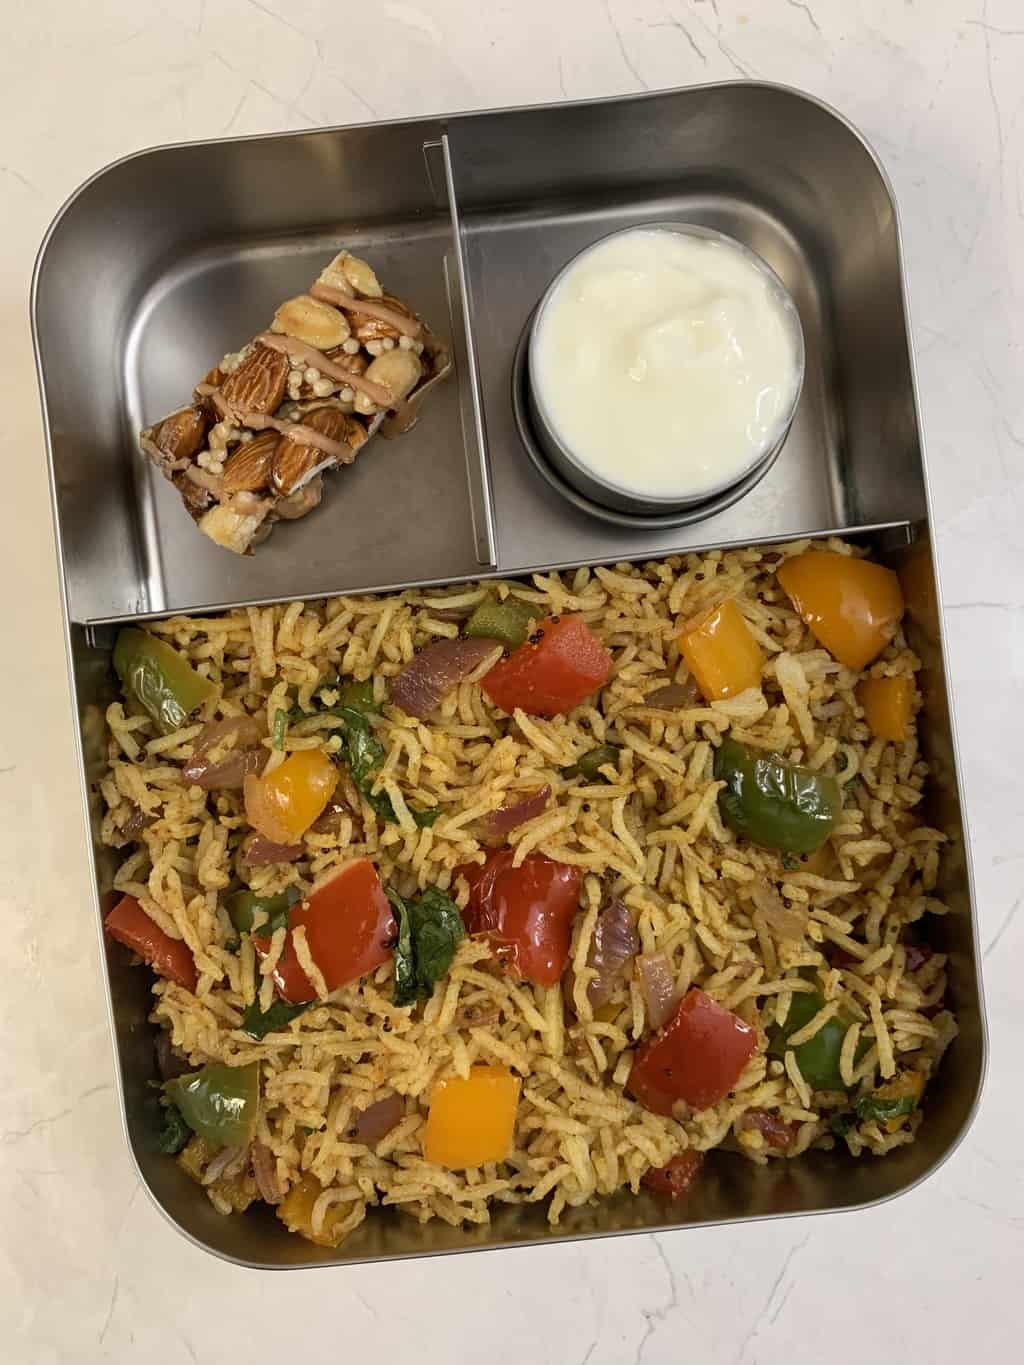 capsicum rice, yogurt and protein bar in bento lunch box.